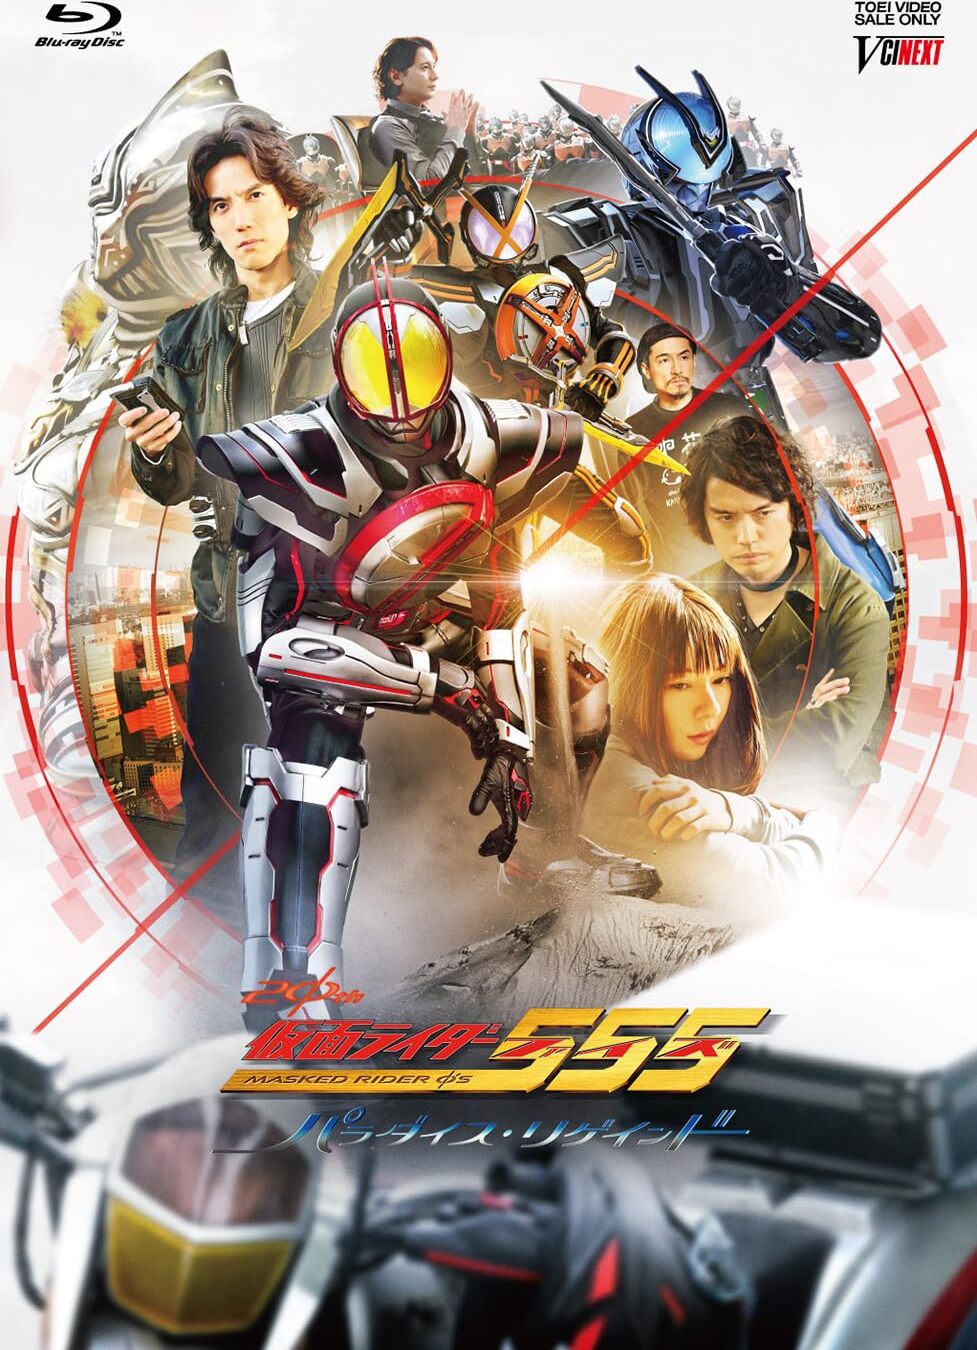 Kamen Rider 555 20th: Paradise Regained Blu-ray (Amazon Exclusive 